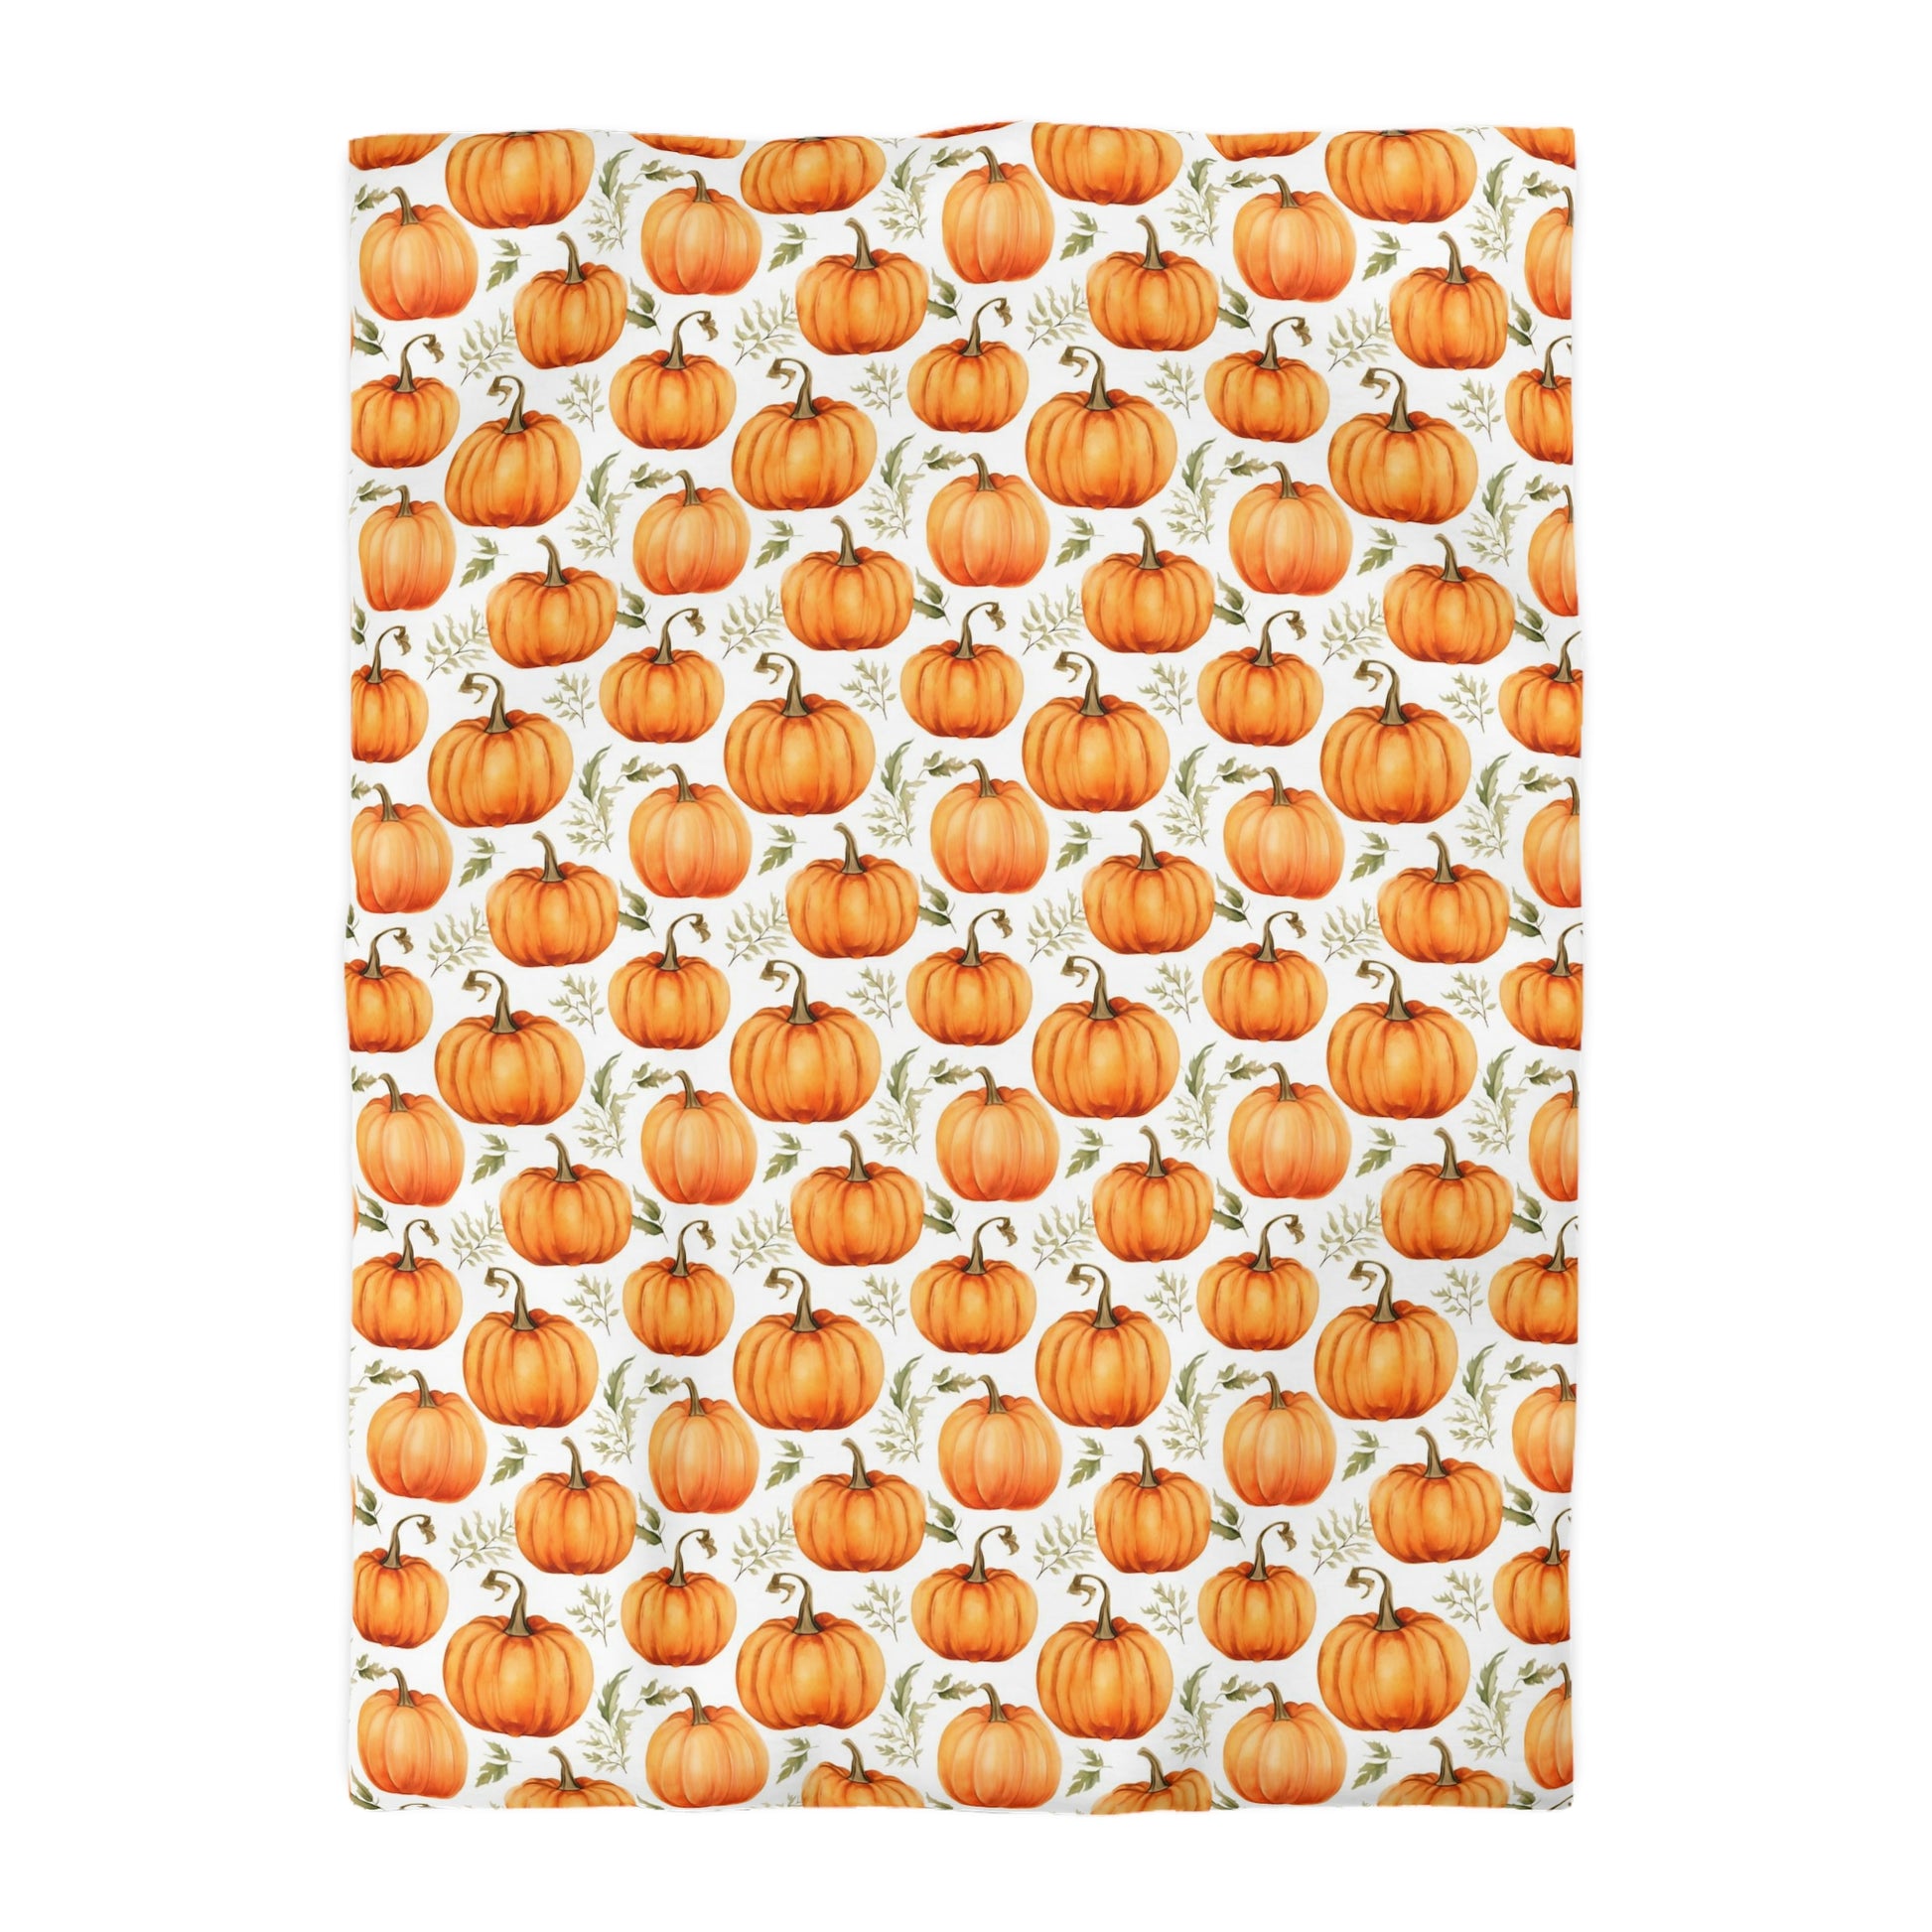 Pumpkins Duvet Cover, Orange Fall Autumn Bedding Queen King Full Twin XL Microfiber Unique Designer Bed Quilt Bedroom Decor Starcove Fashion